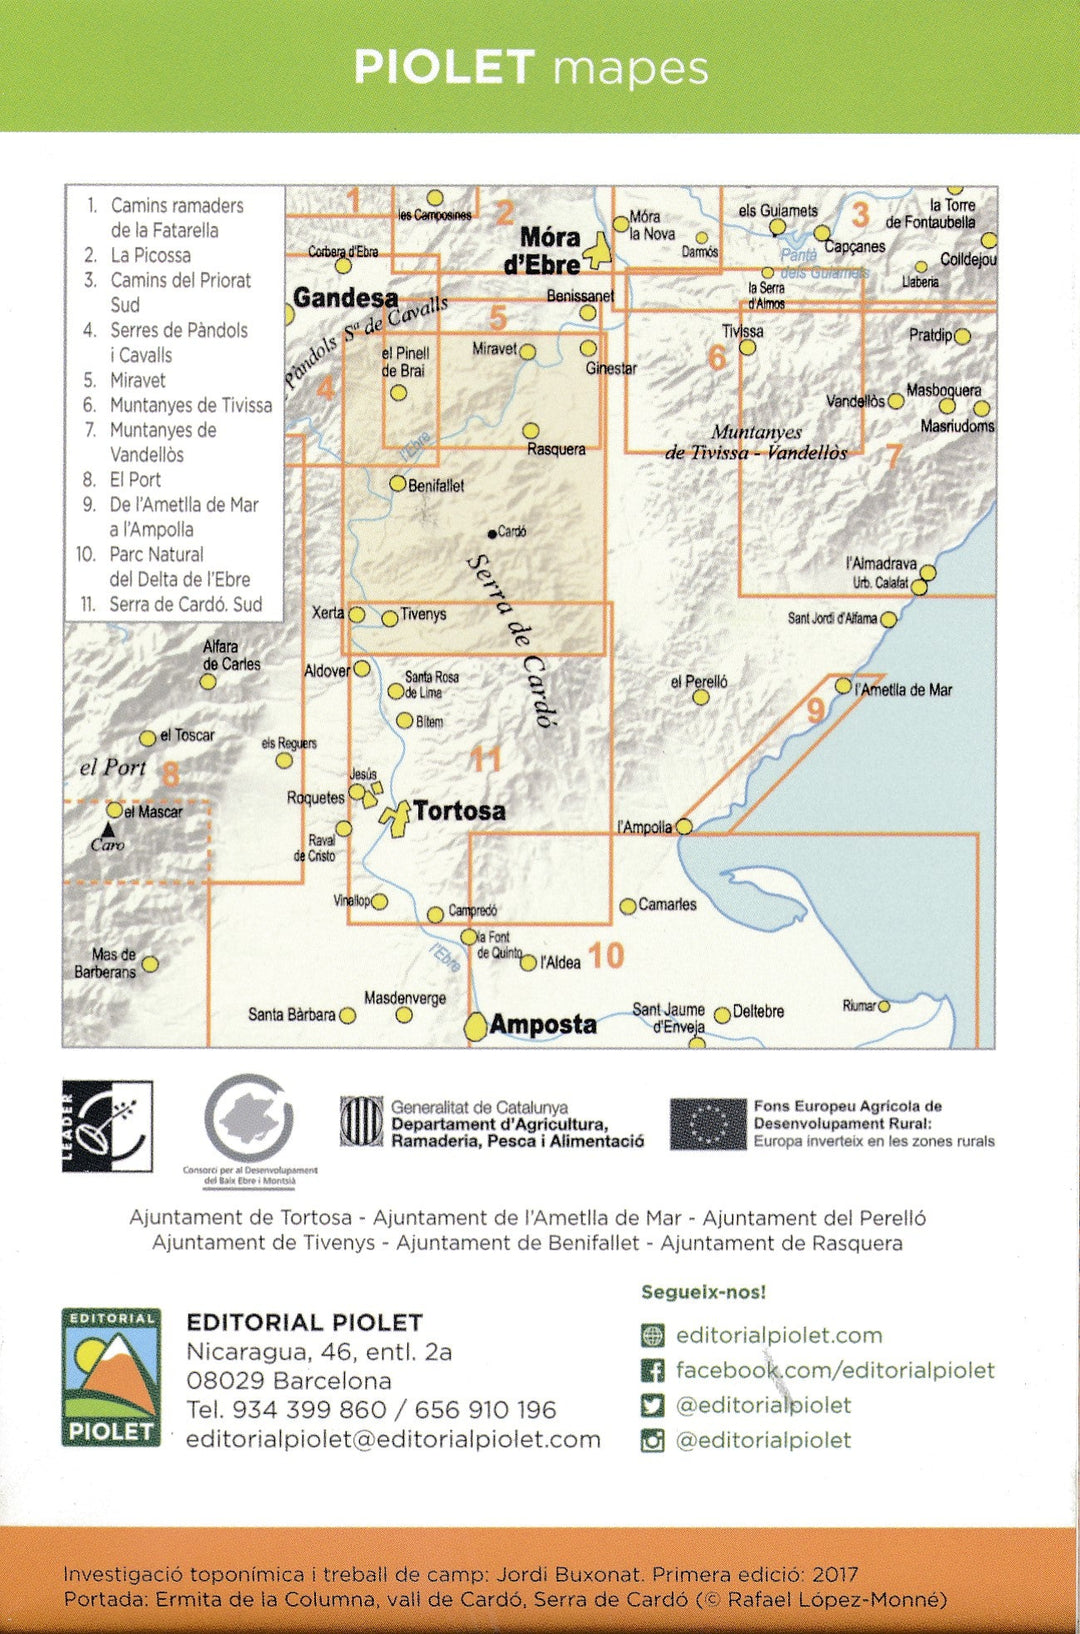 Carte de randonnée - Serra de Cardó (Catalogne) | Piolet carte pliée Editorial Piolet 